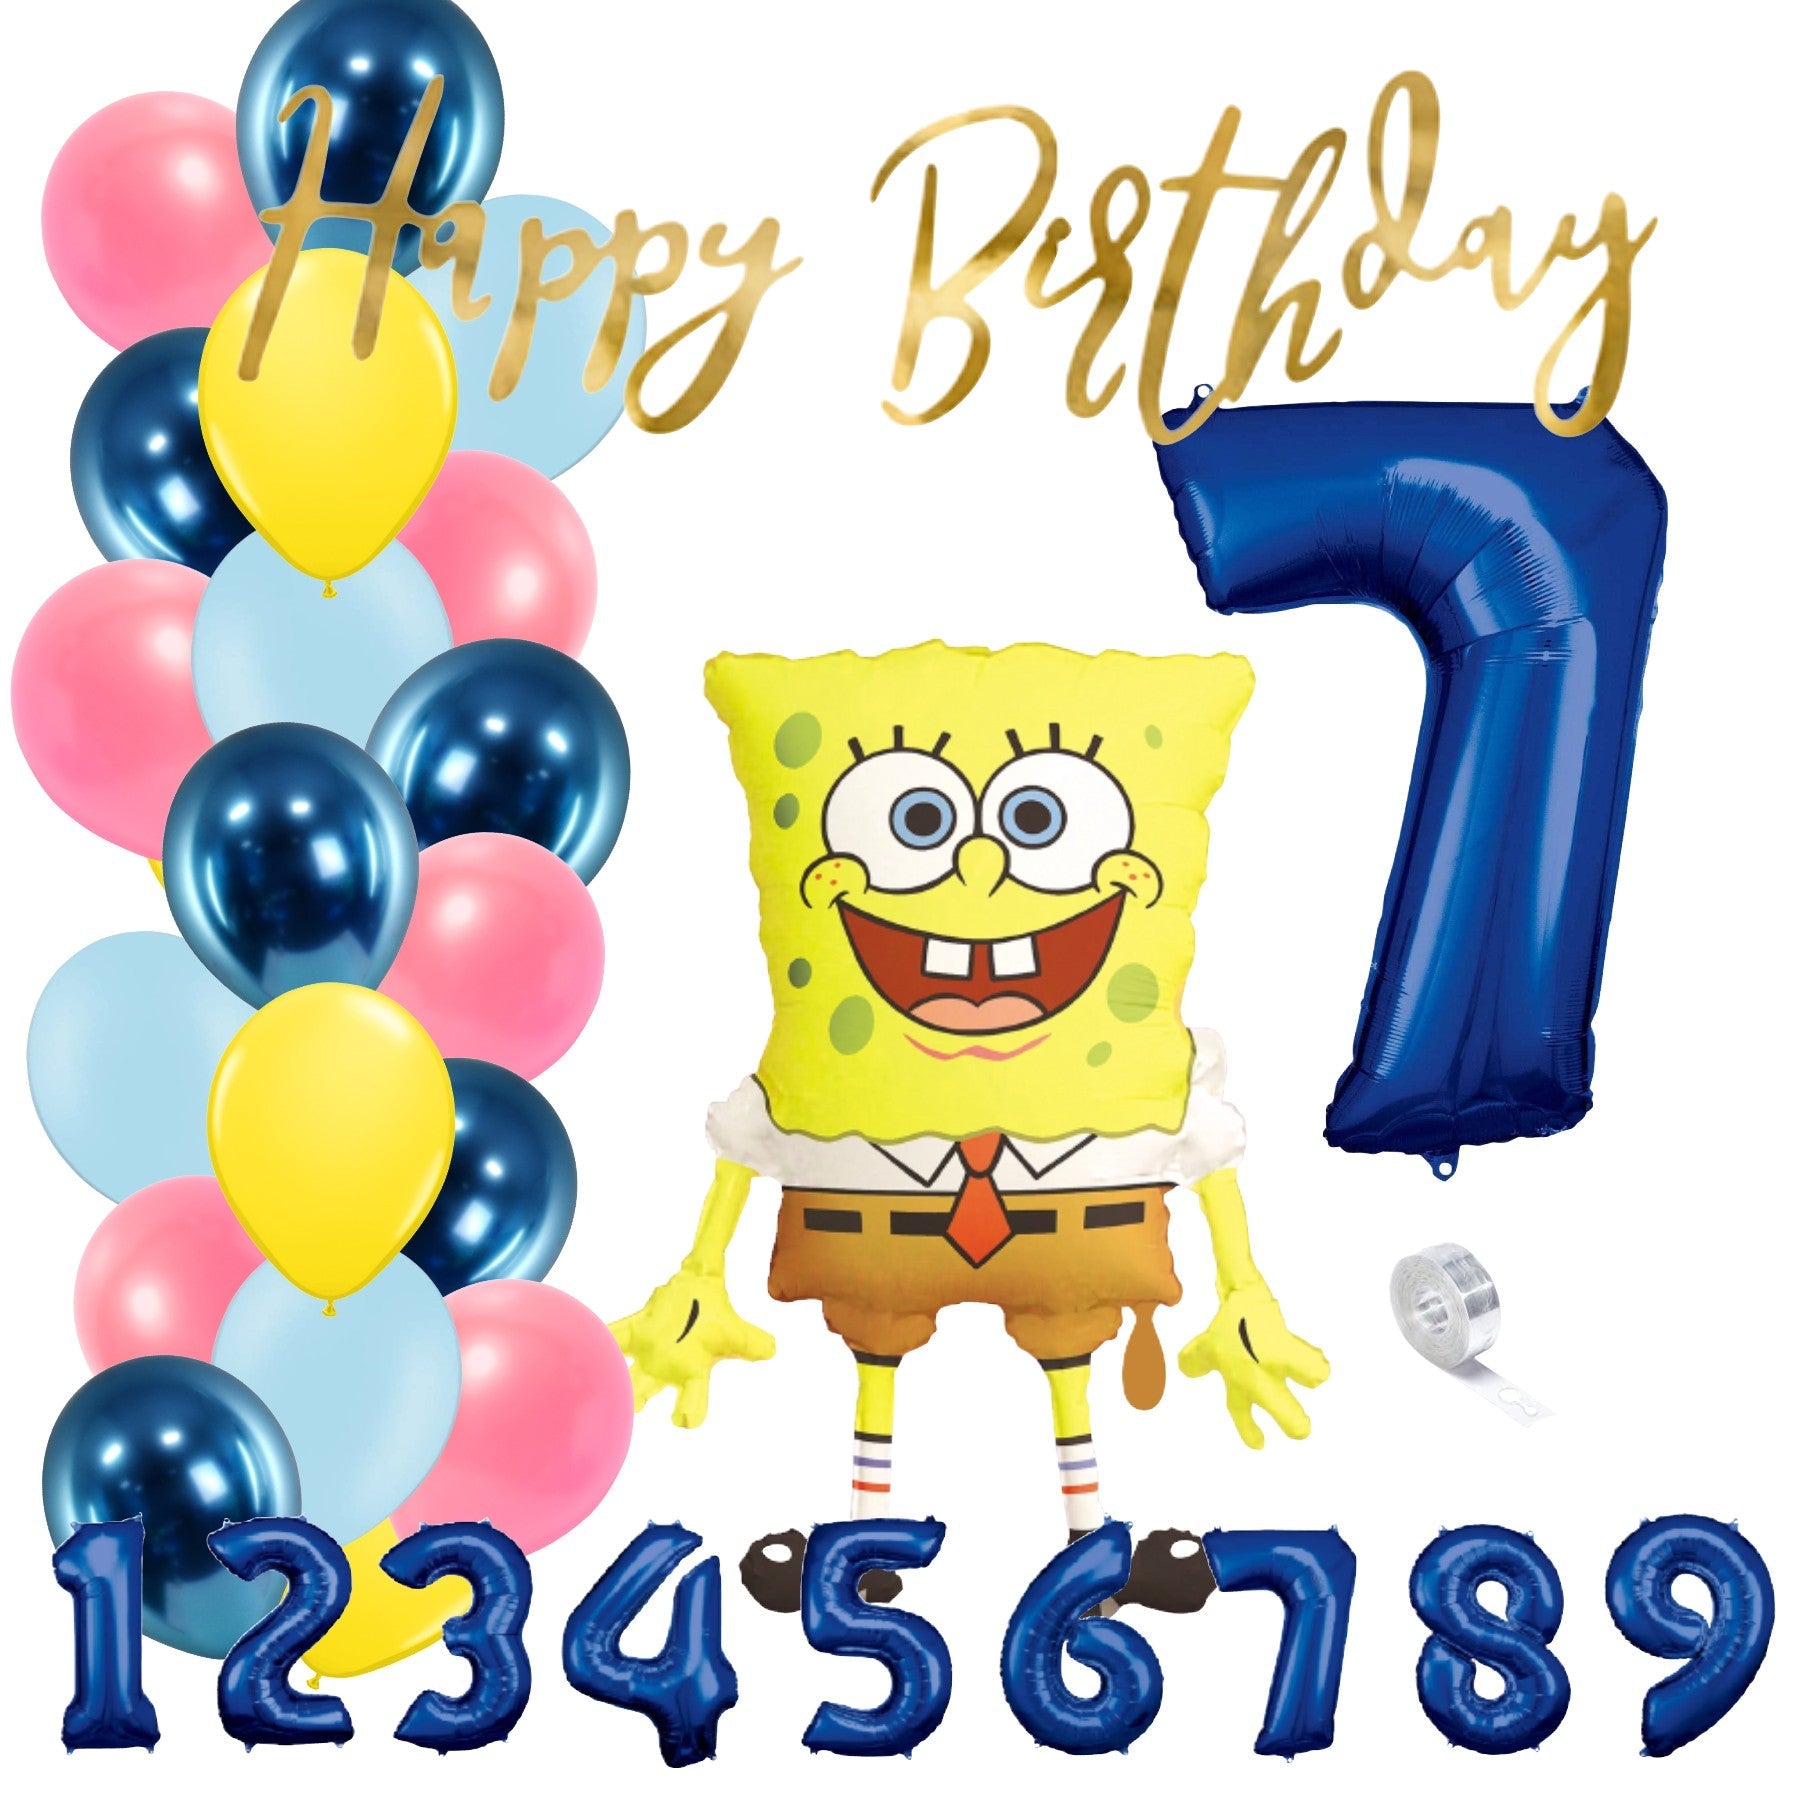 Partykarton "Spongebob" 29 Teile - Party im Karton